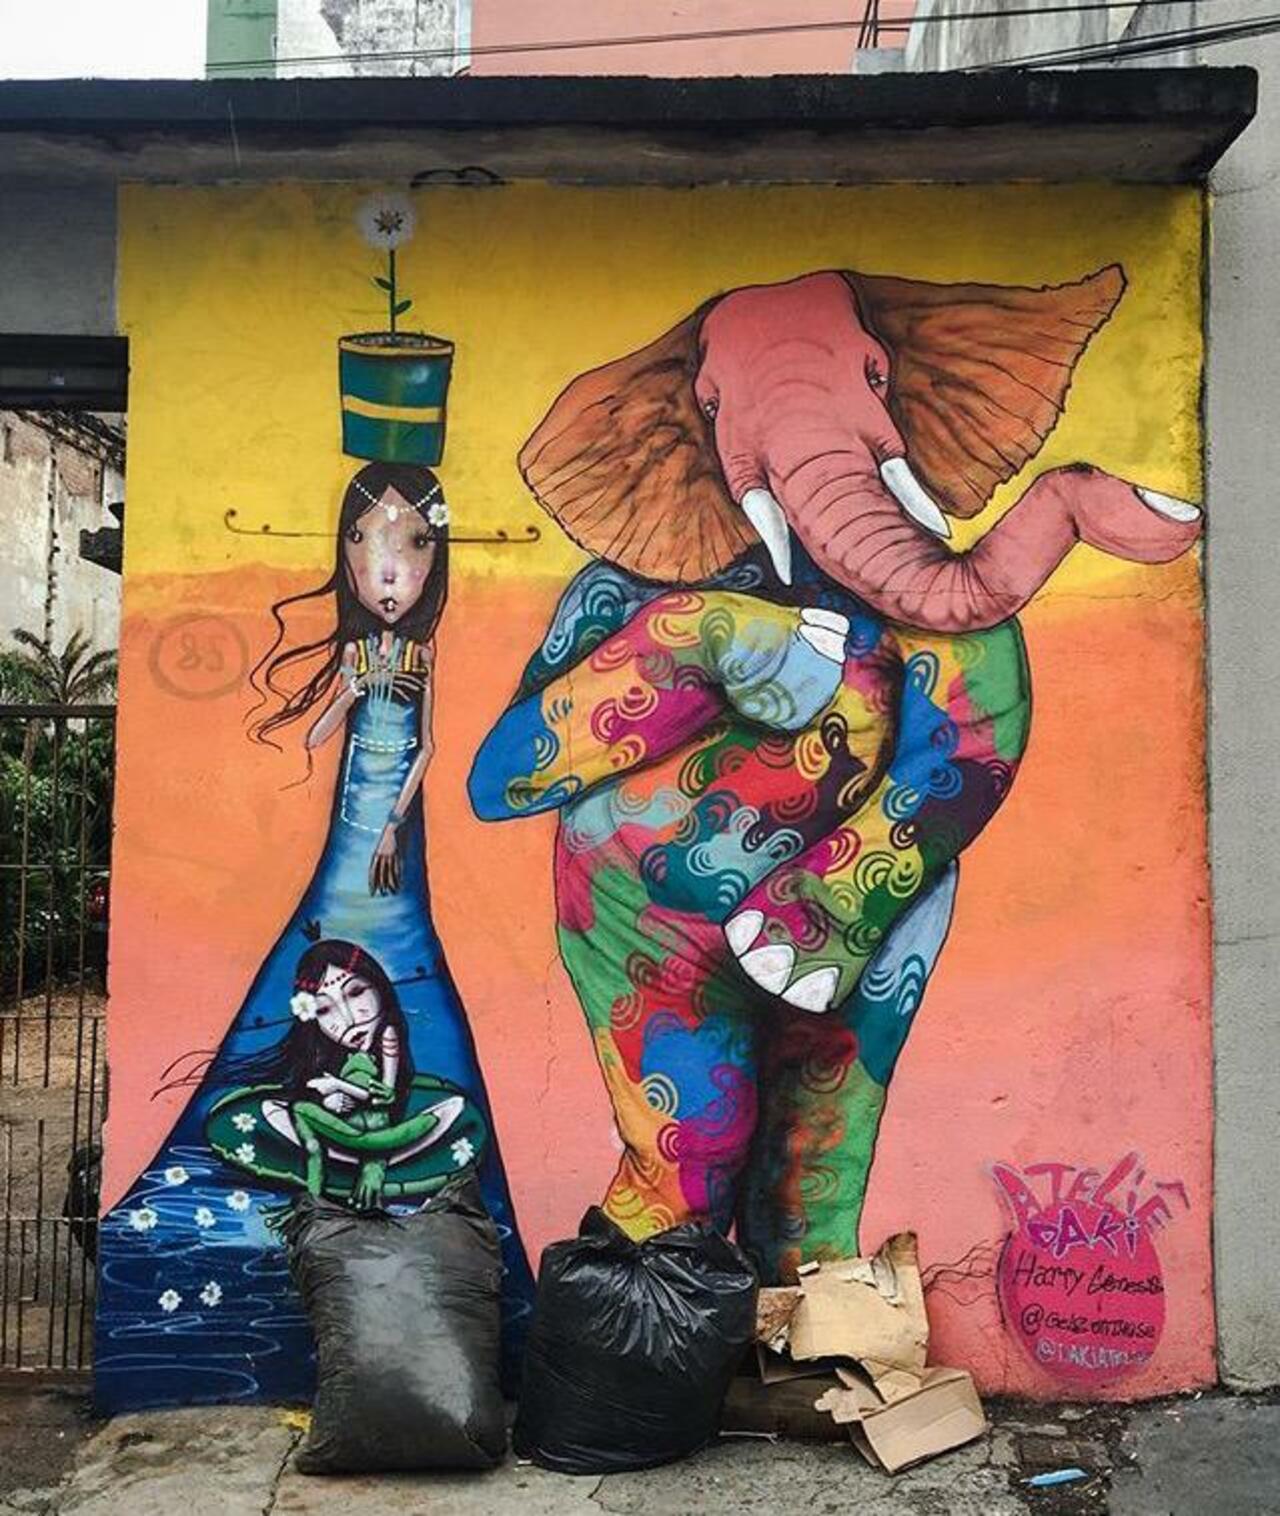 Street Art by Harry Geneis & Gelson in São Paulo #art #mural #graffiti #streetart http://t.co/SlLbhuMZfD … … … http://twitter.com/charlesjackso14/status/648021461467316224